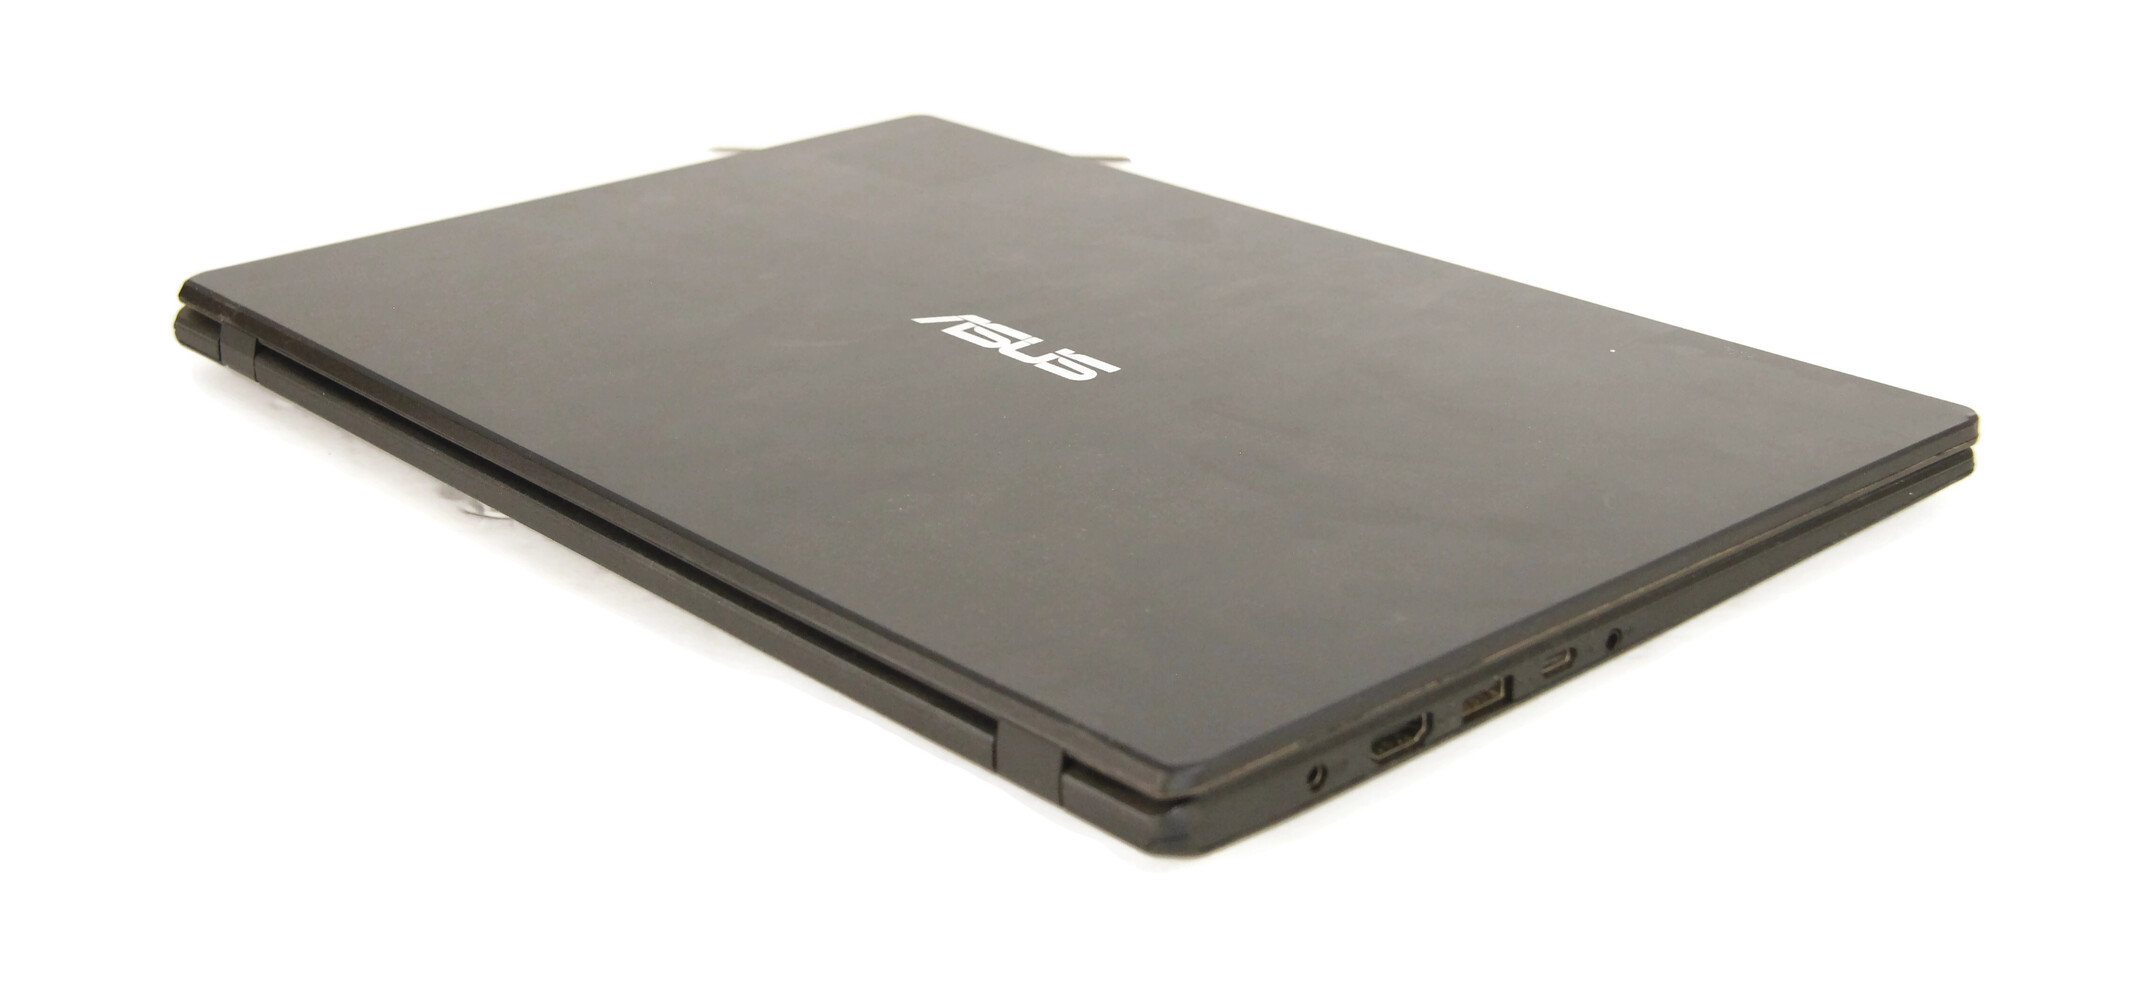 Asus L510 Vivobook Laptop Computer 128GB 4GB Intel Celeron N4020 1.10Ghz Win10